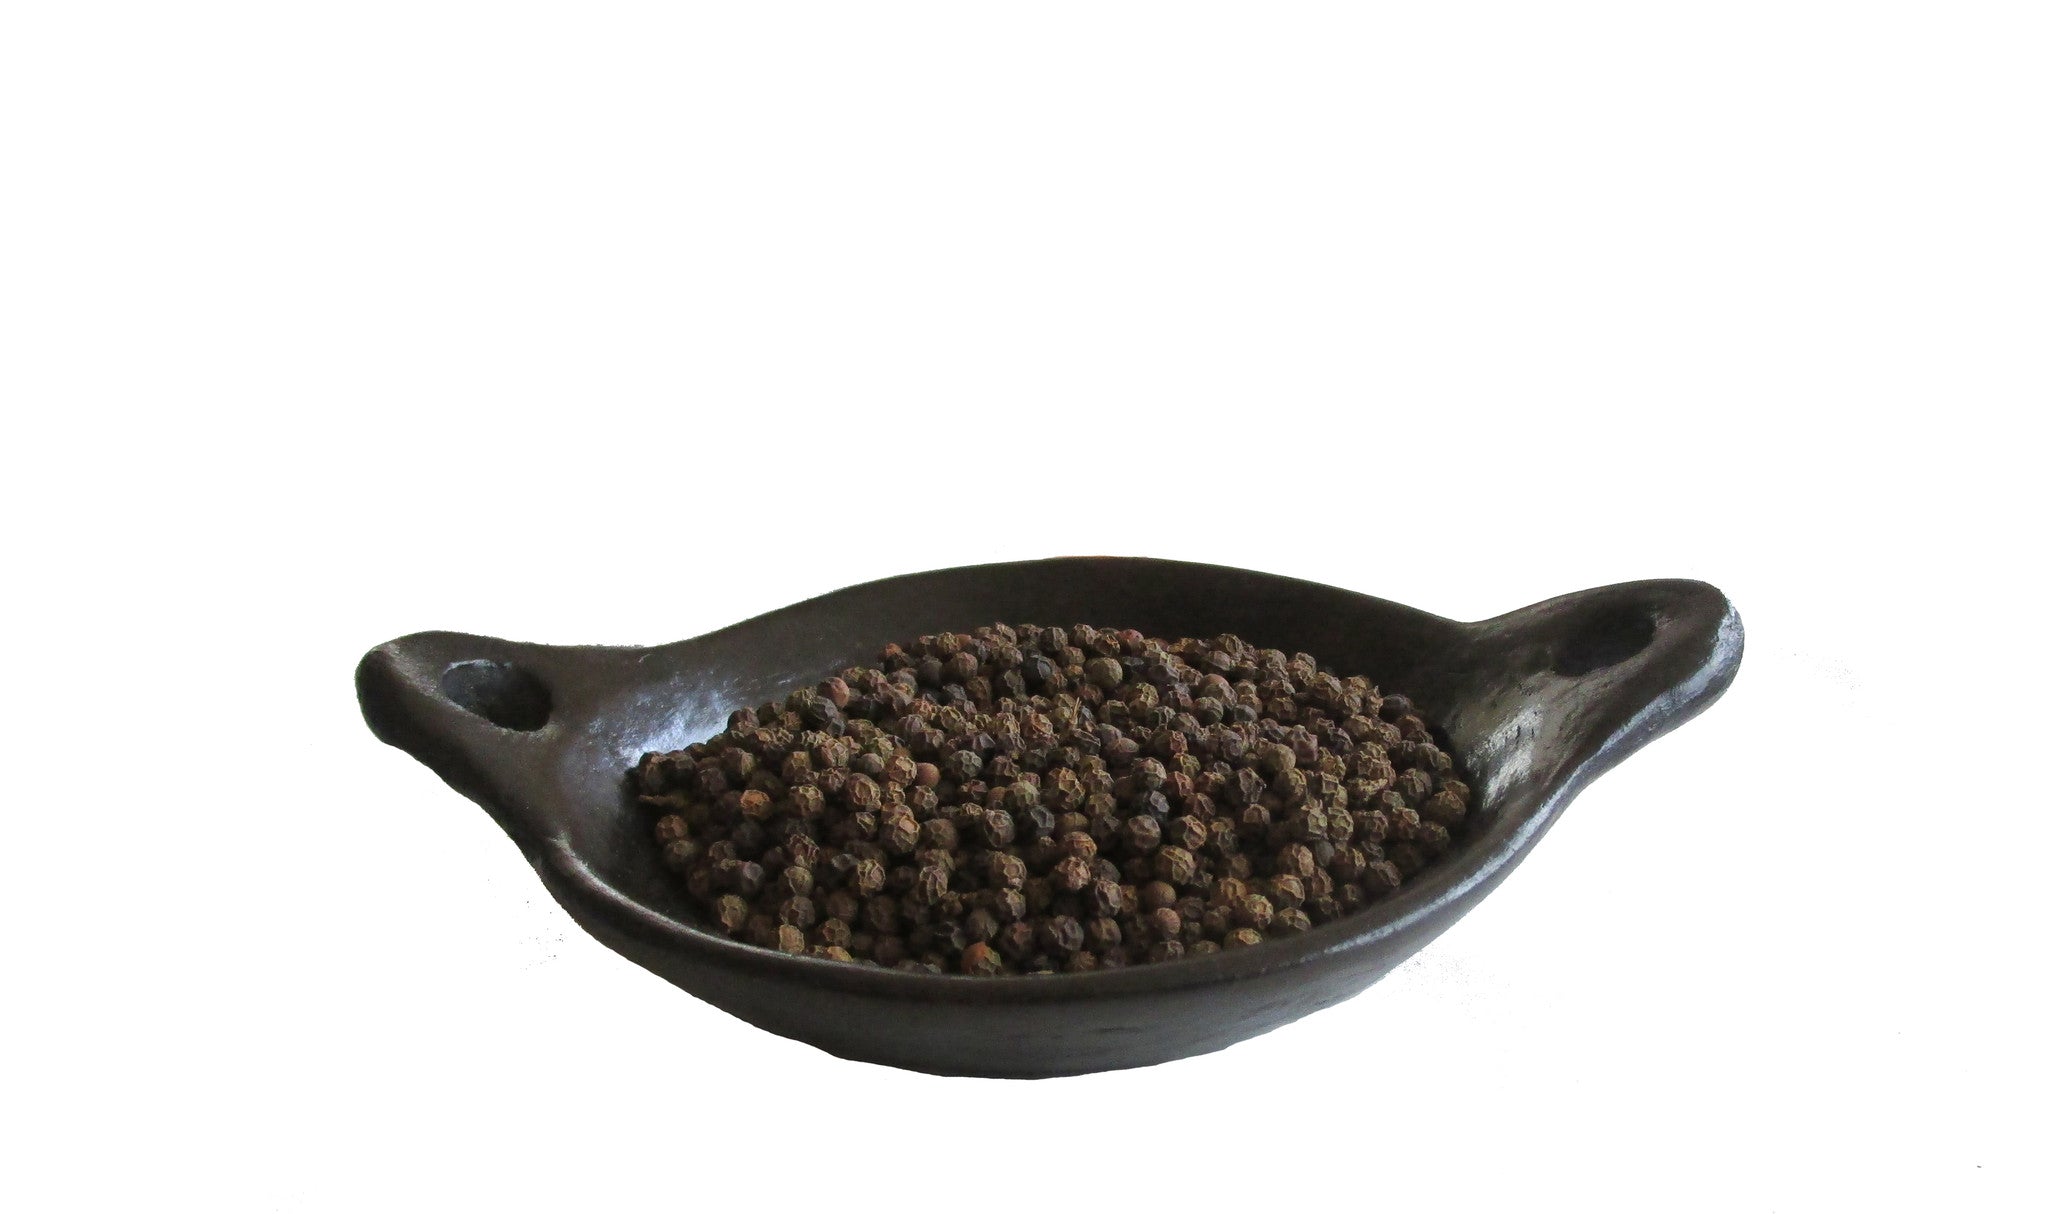 Black Pepper (Whole)